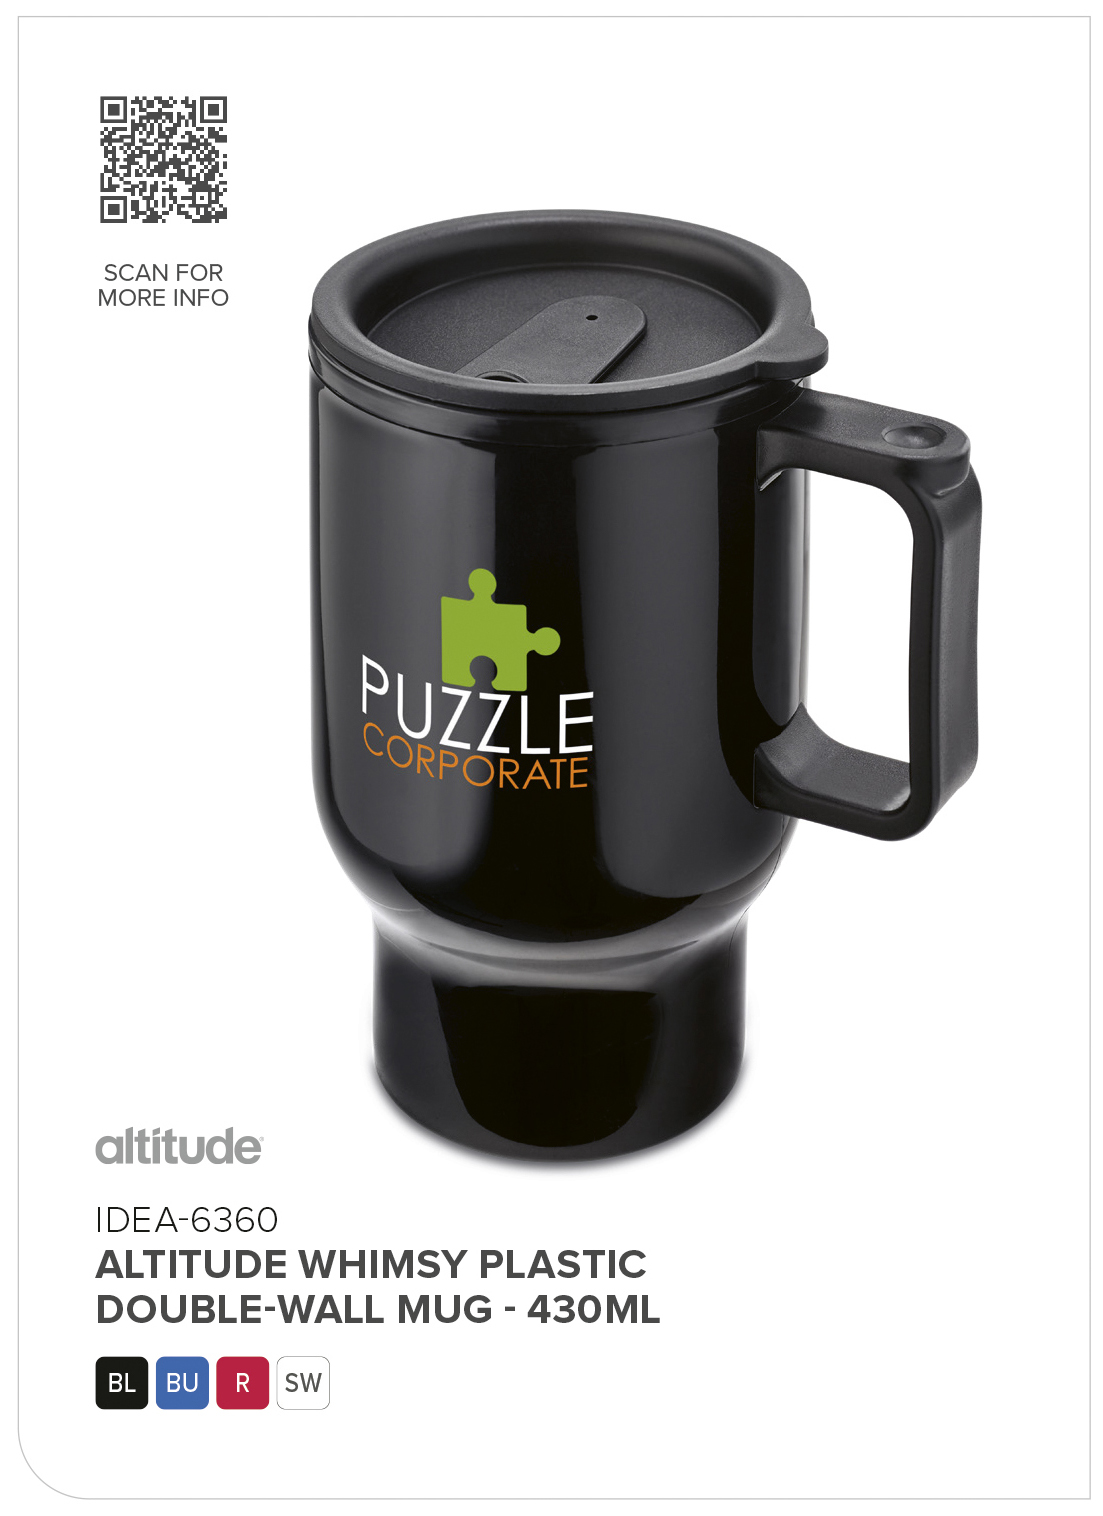 IDEA-6360 - Altitude Whimsy Plastic Double-Wall Mug - 430ml - Catalogue Image